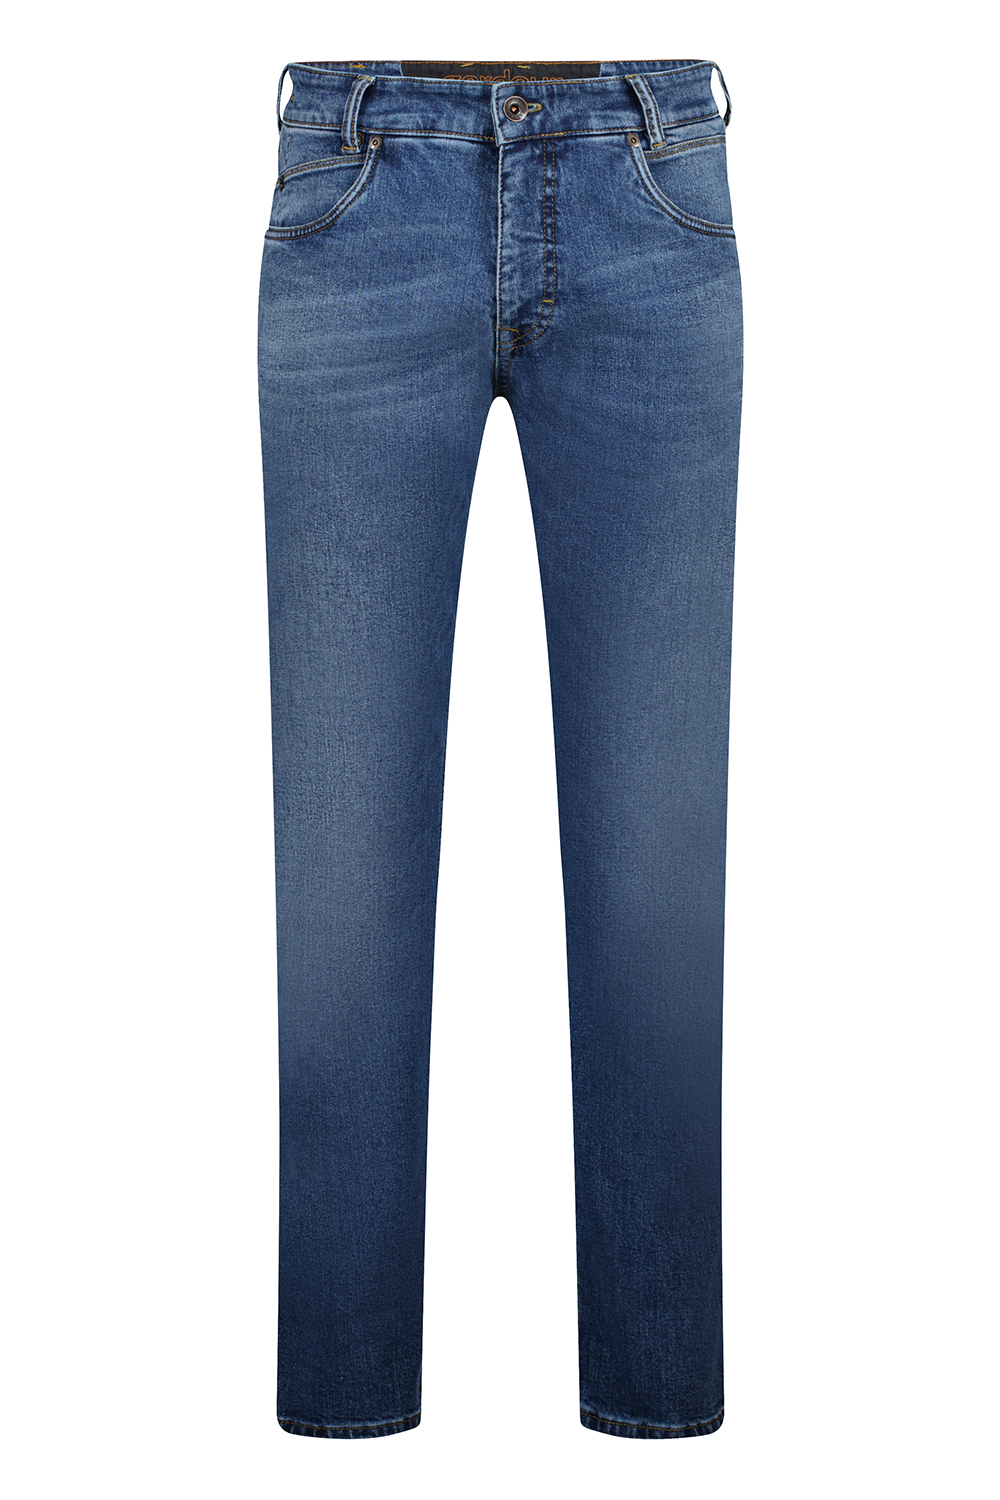 Gardeur - Bennet Modern Fit 5-Pocket Jeans Stone Used - 38/34 - Heren